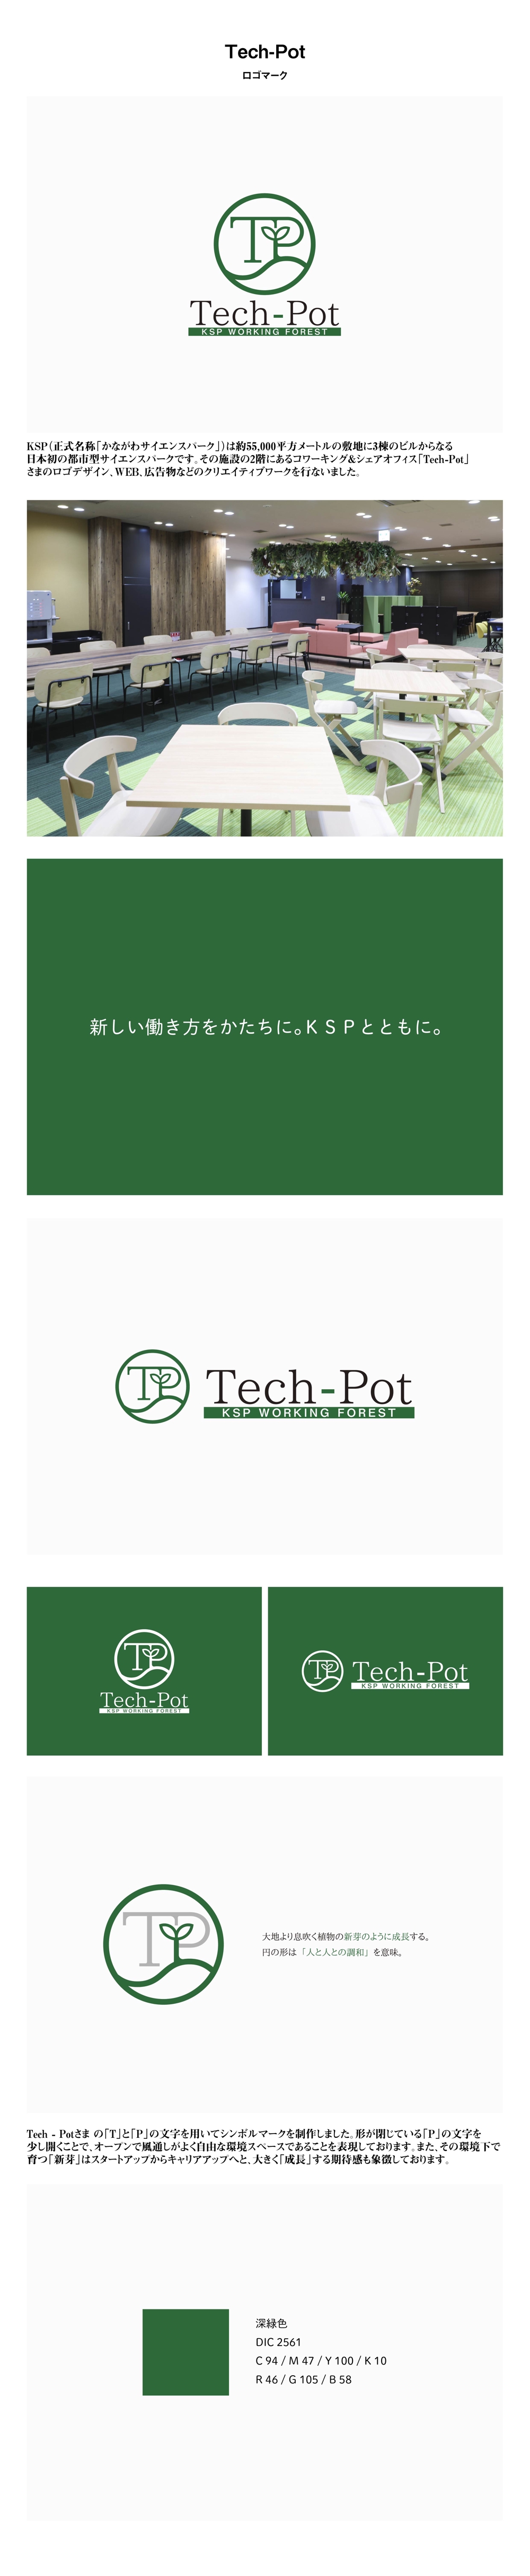 「Tech-Pot」ロゴマーク・ブランディング